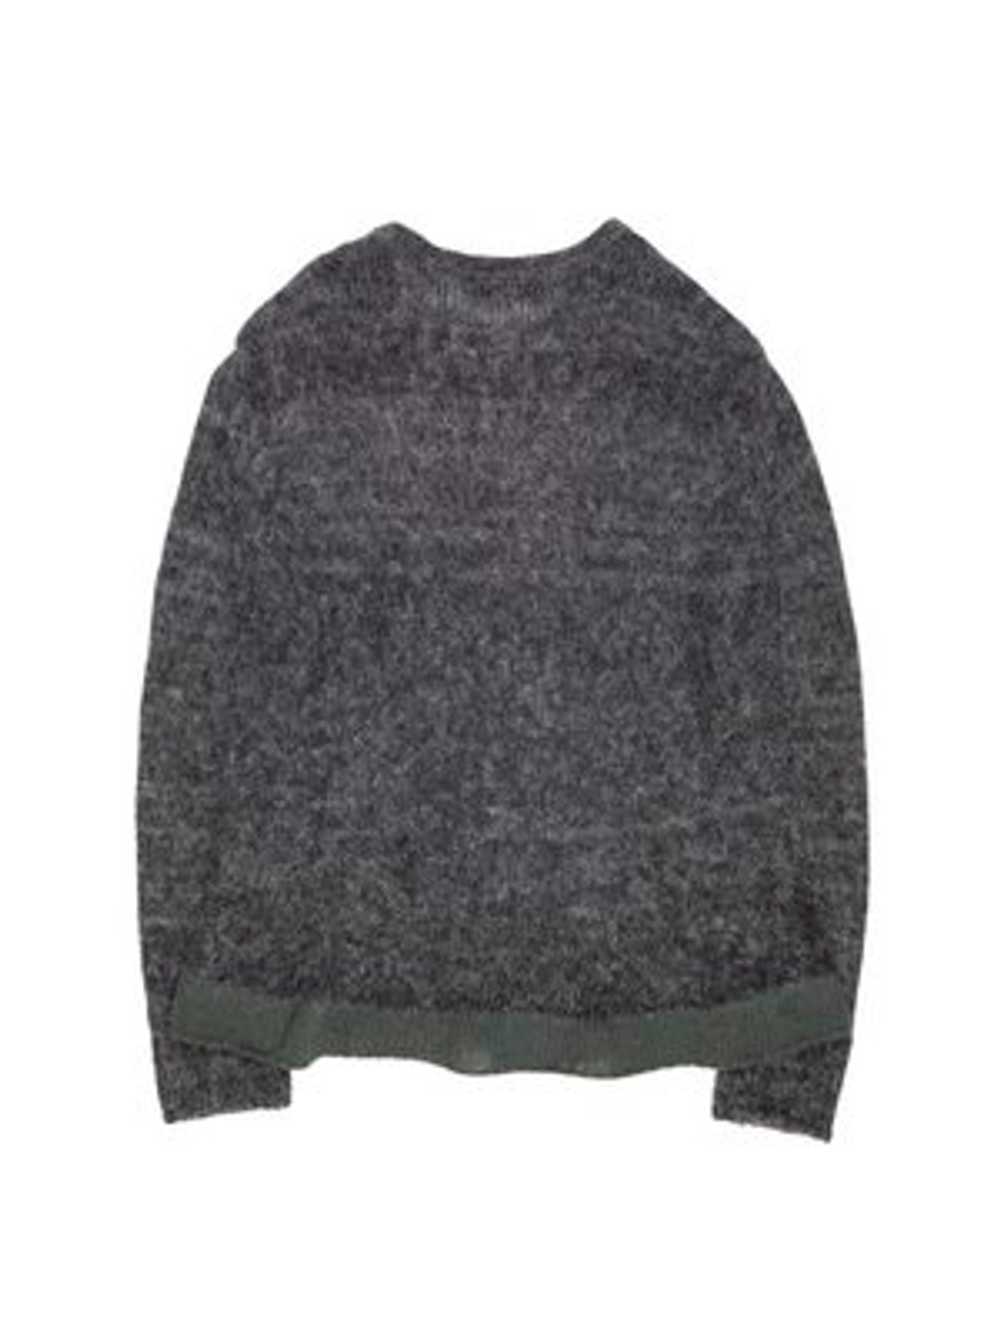 Yohji Yamamoto Y’s for Men Mohair Sweater - image 2